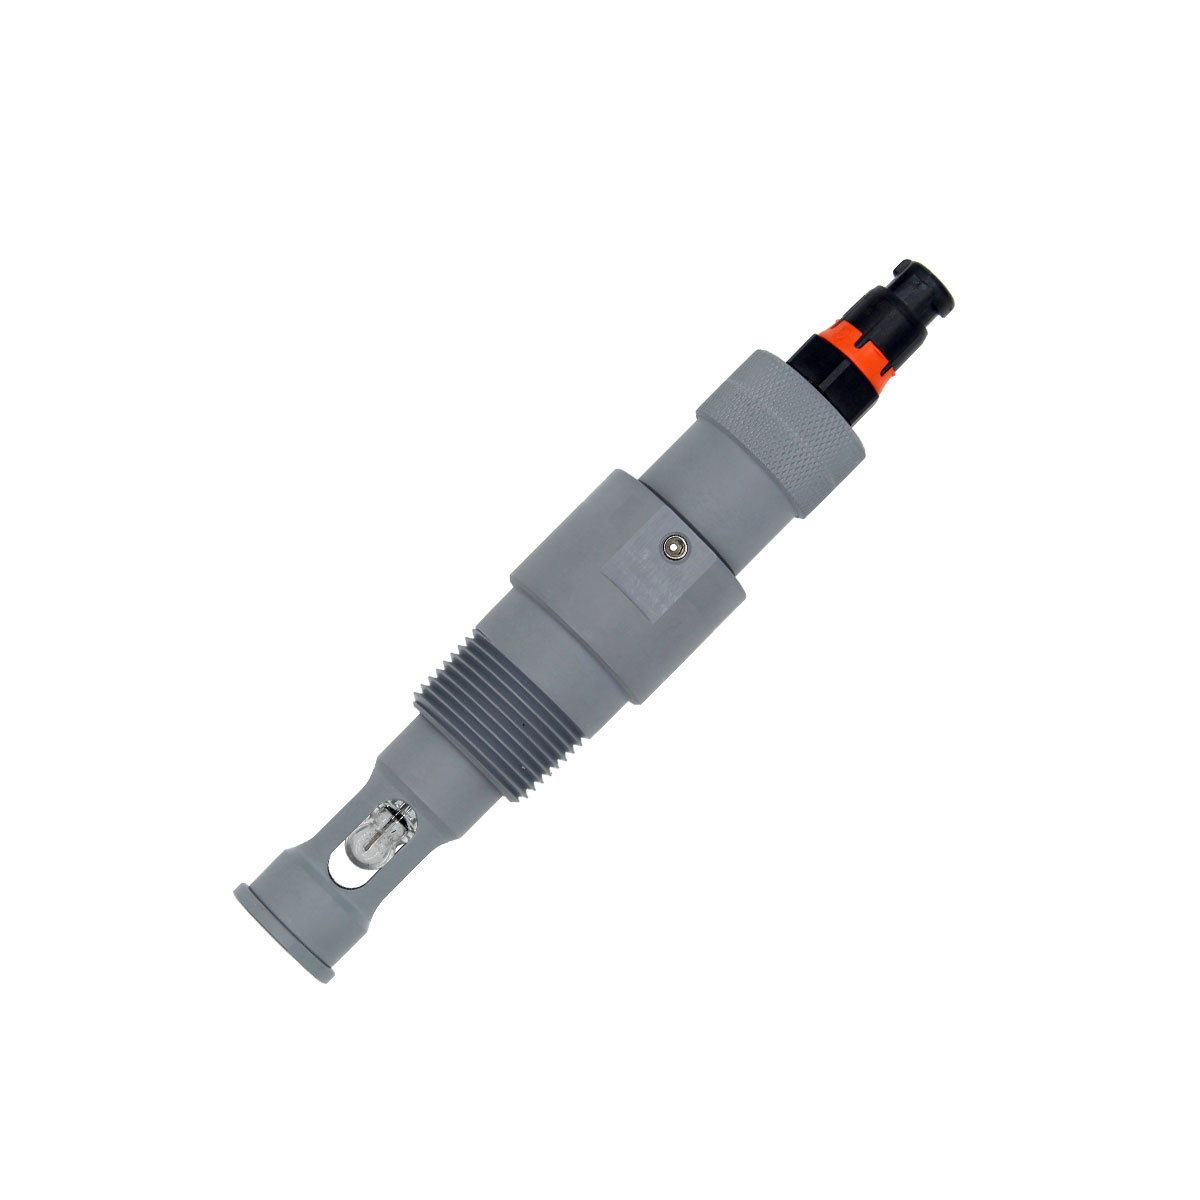 CSR 120 retractable holder with pH sensor